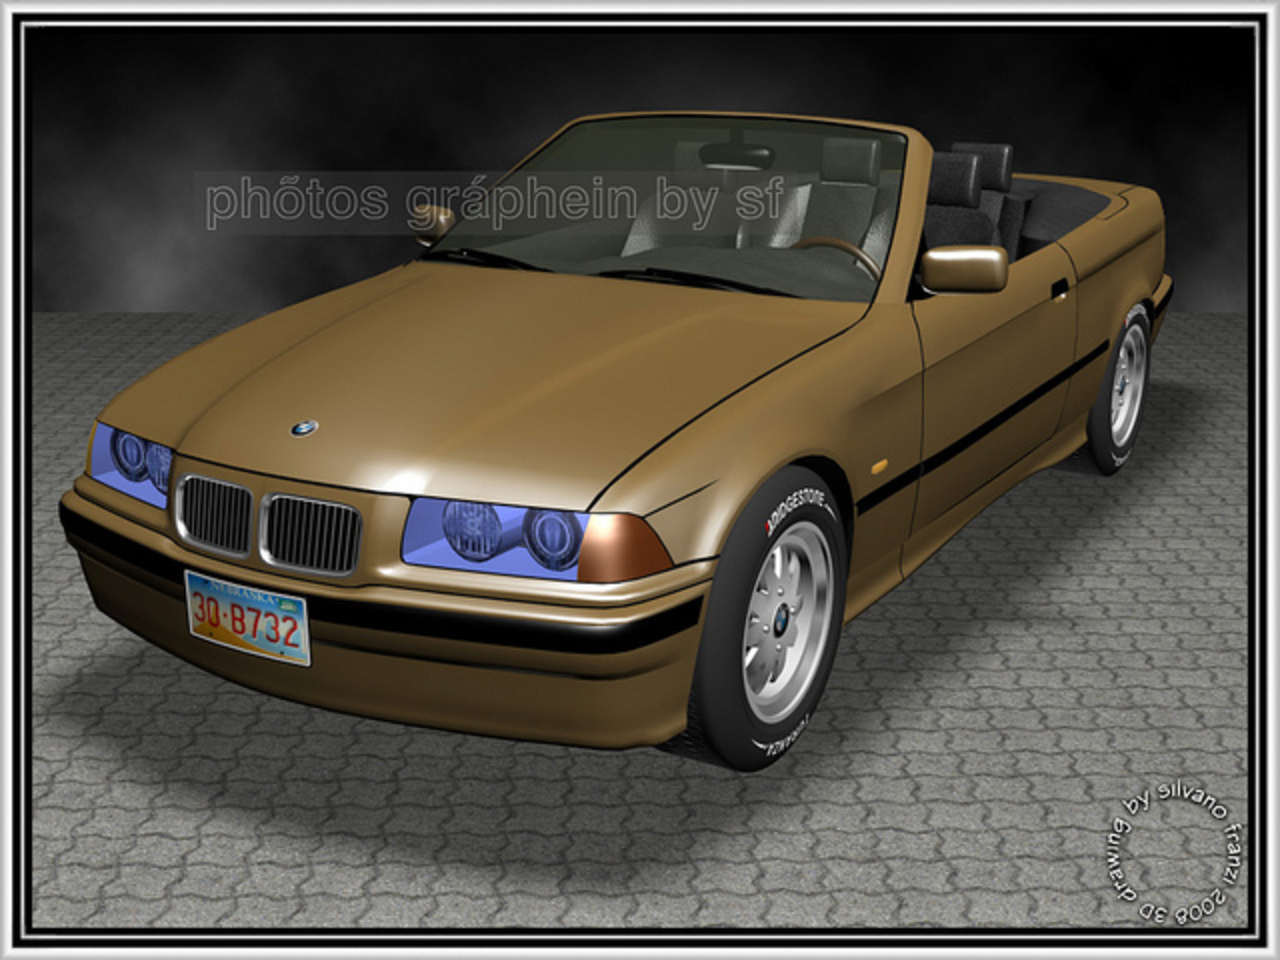 BMW 325i CABRIO" | Flickr - Photo Sharing!